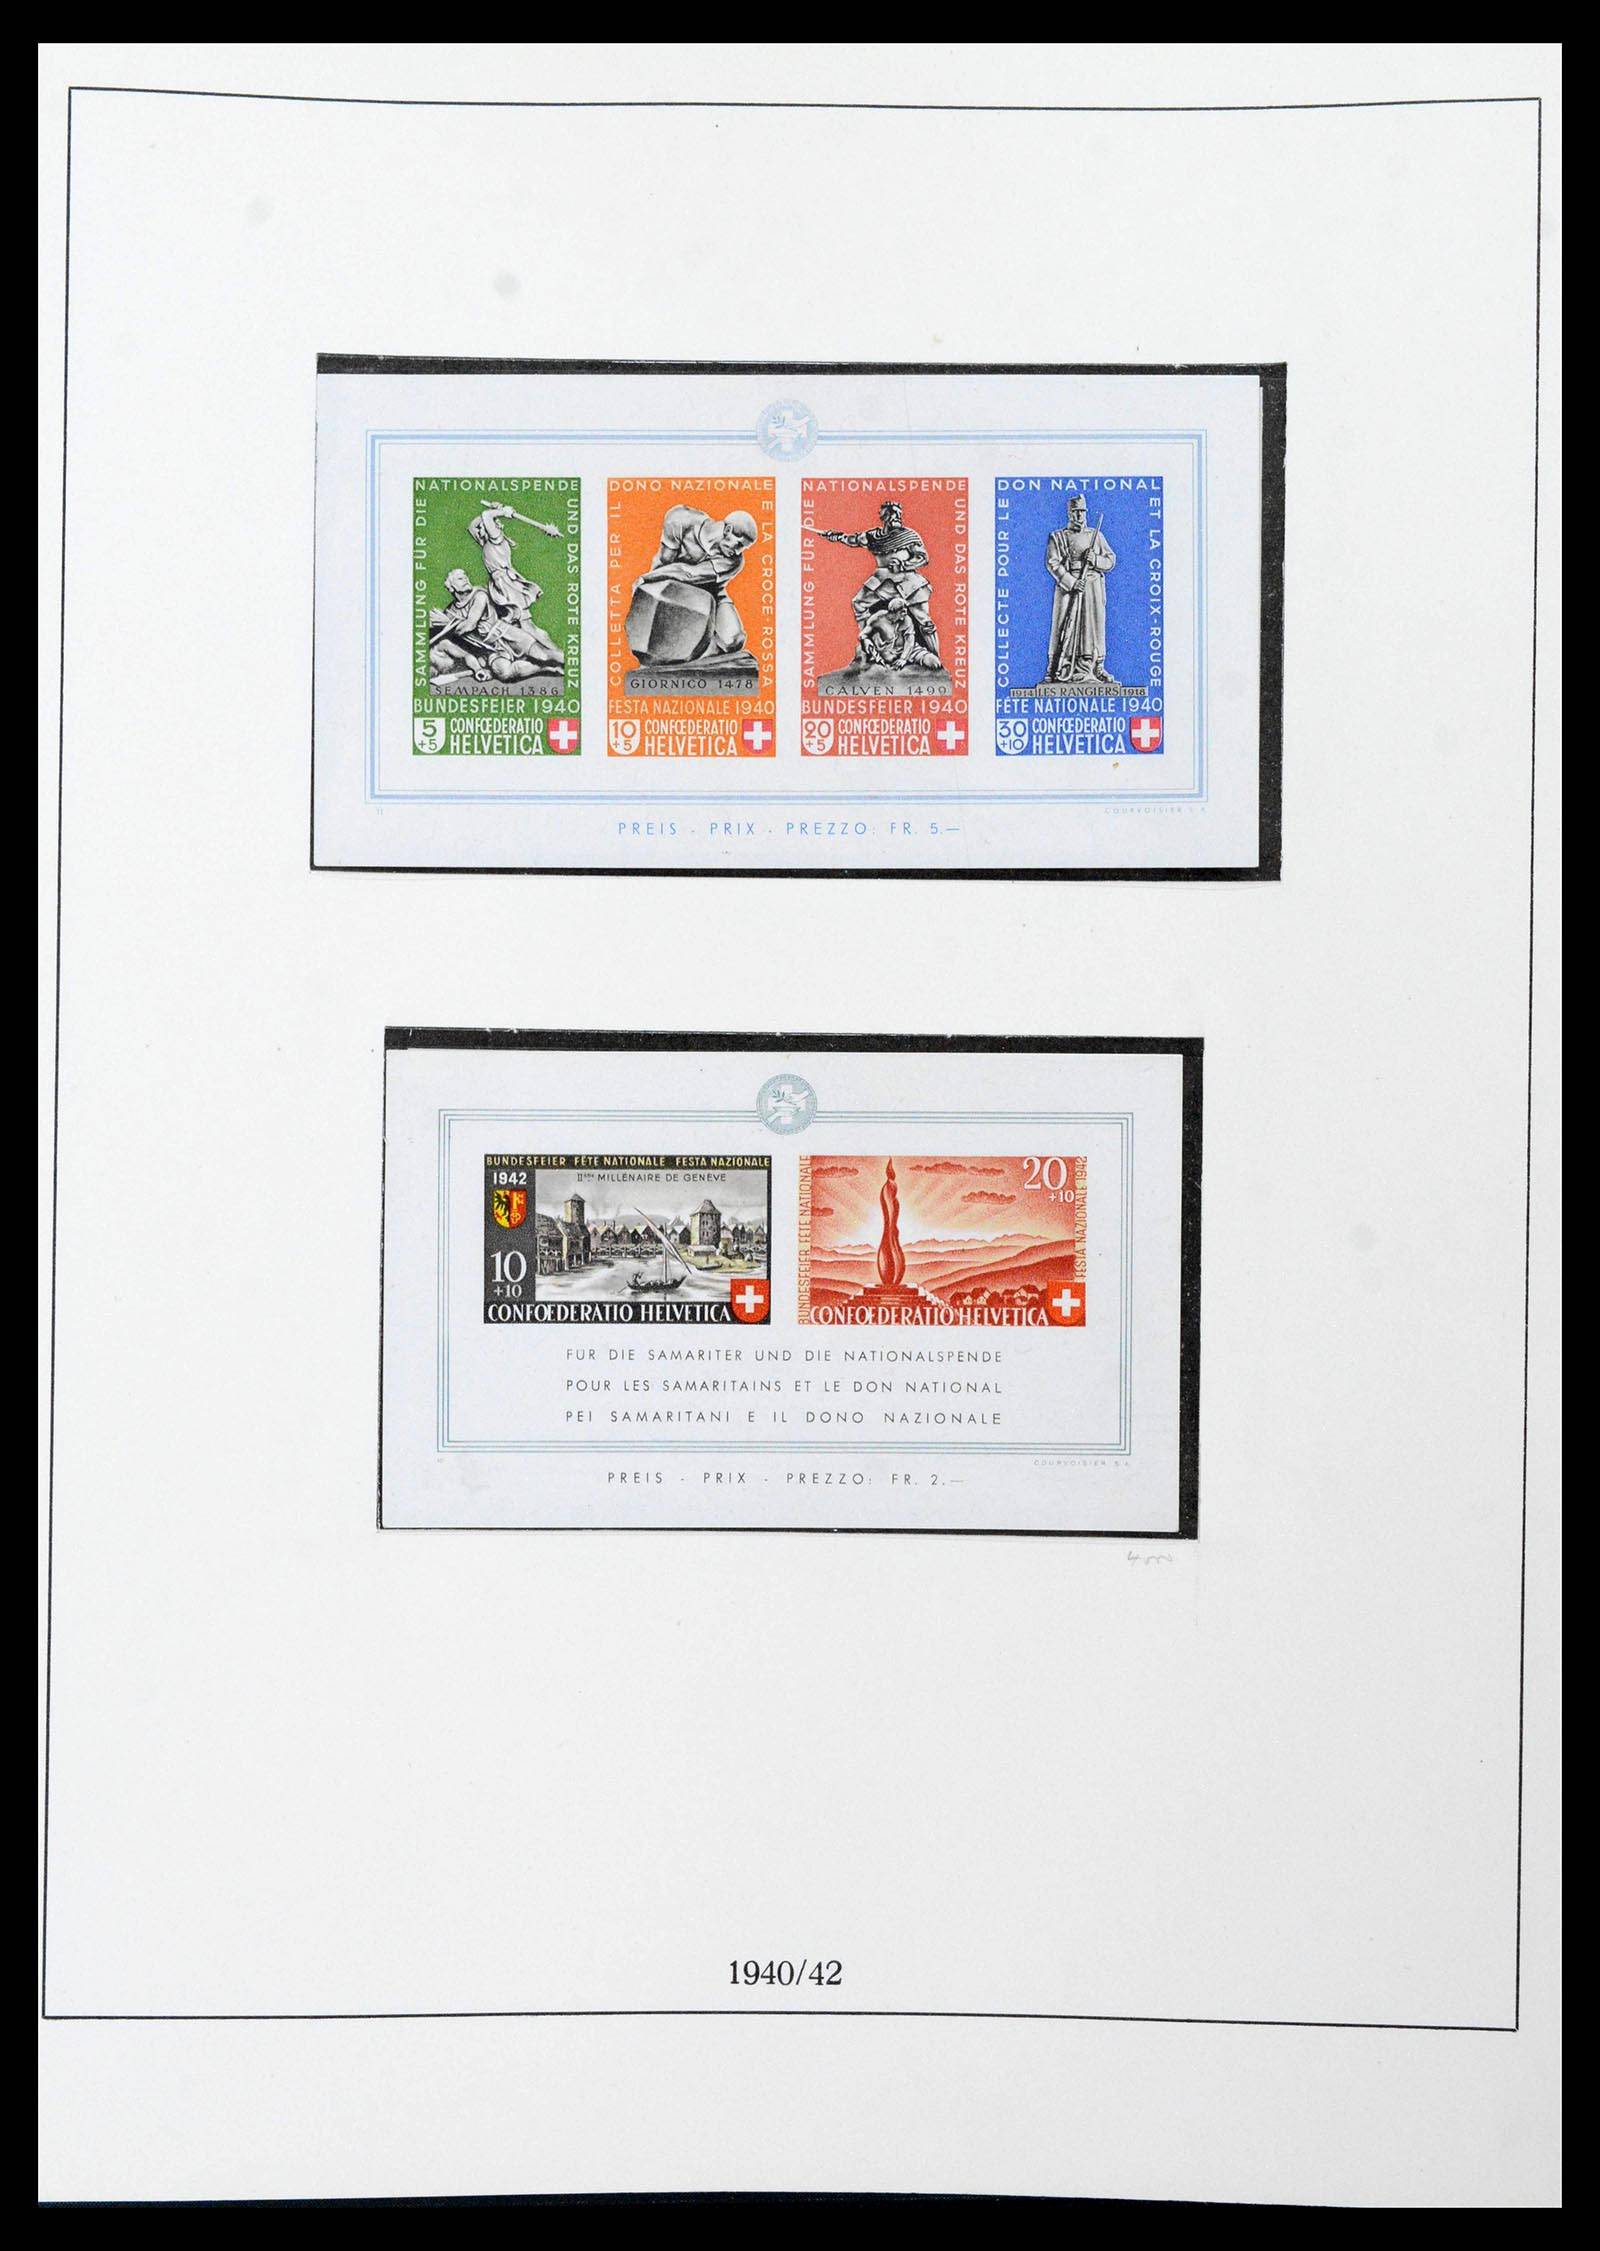 39235 0033 - Stamp collection 39235 Switzerland 1843-1960.